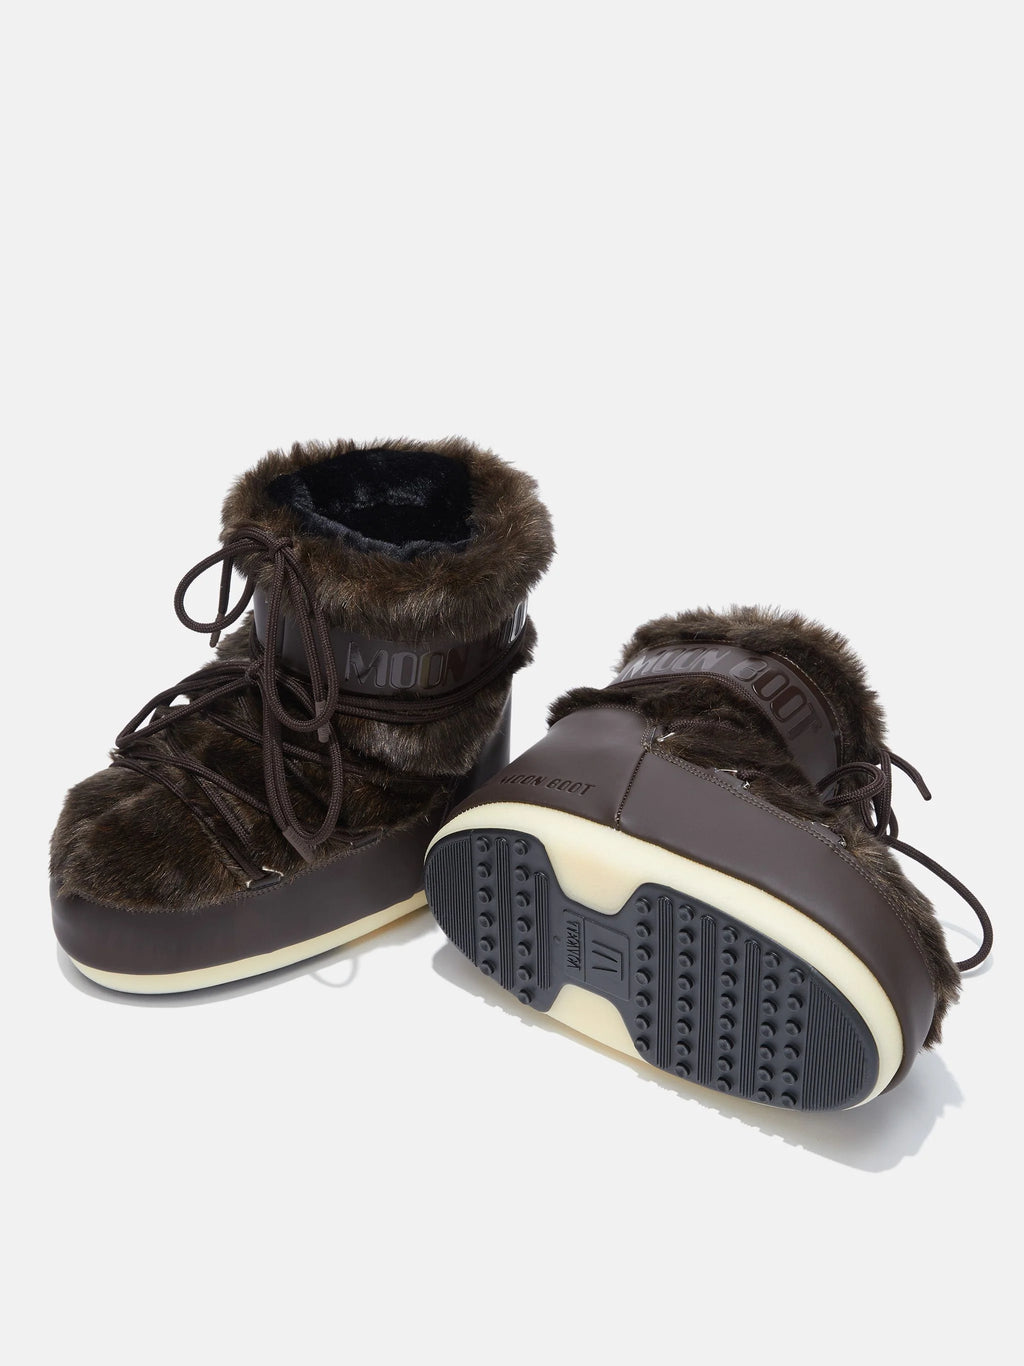 Erica Wilson Faux Fur Boots